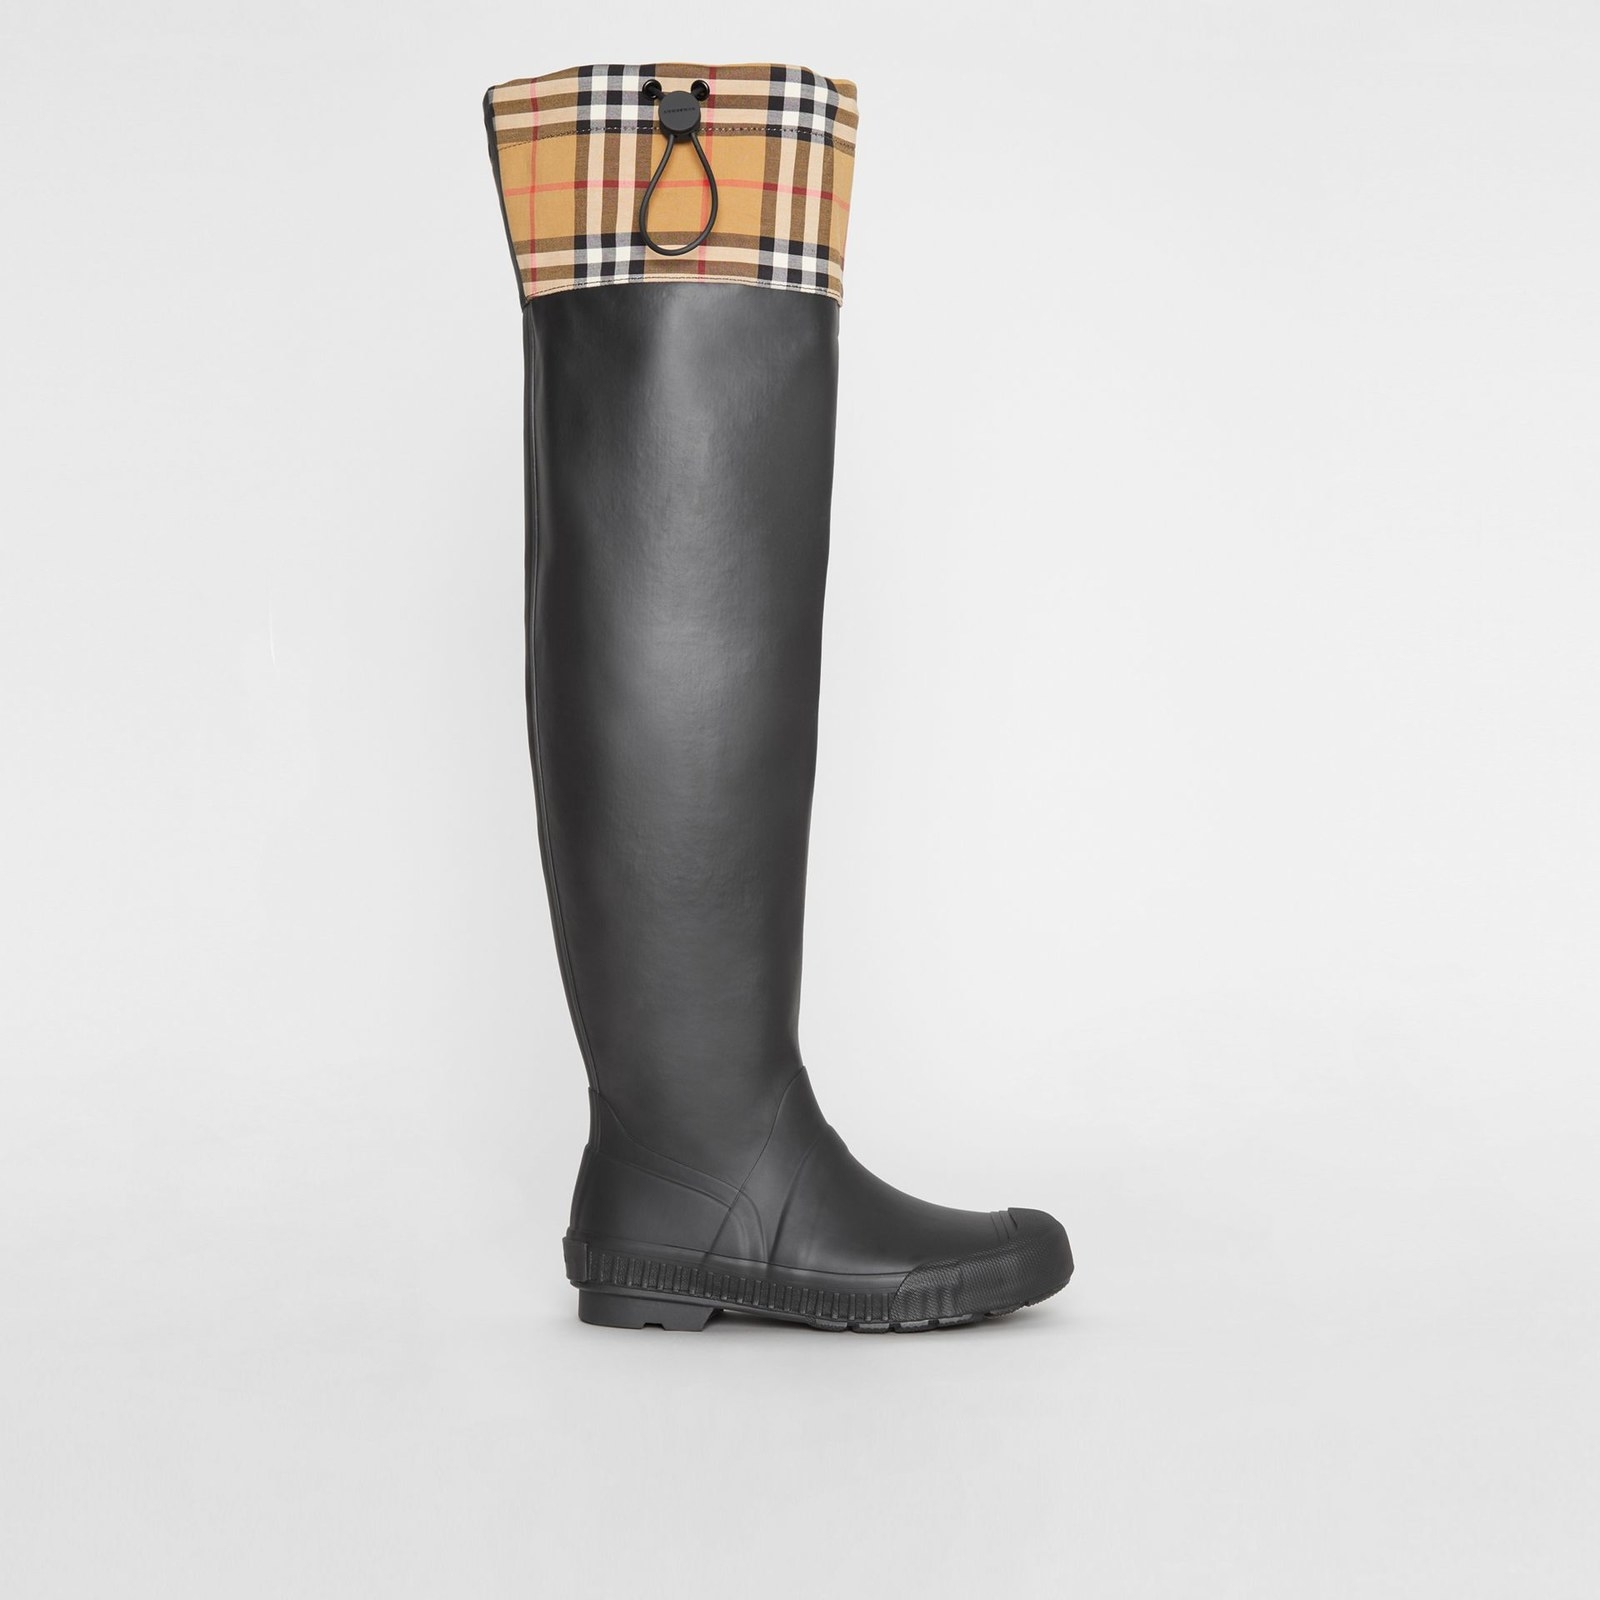 burberry rain boots sale amazon